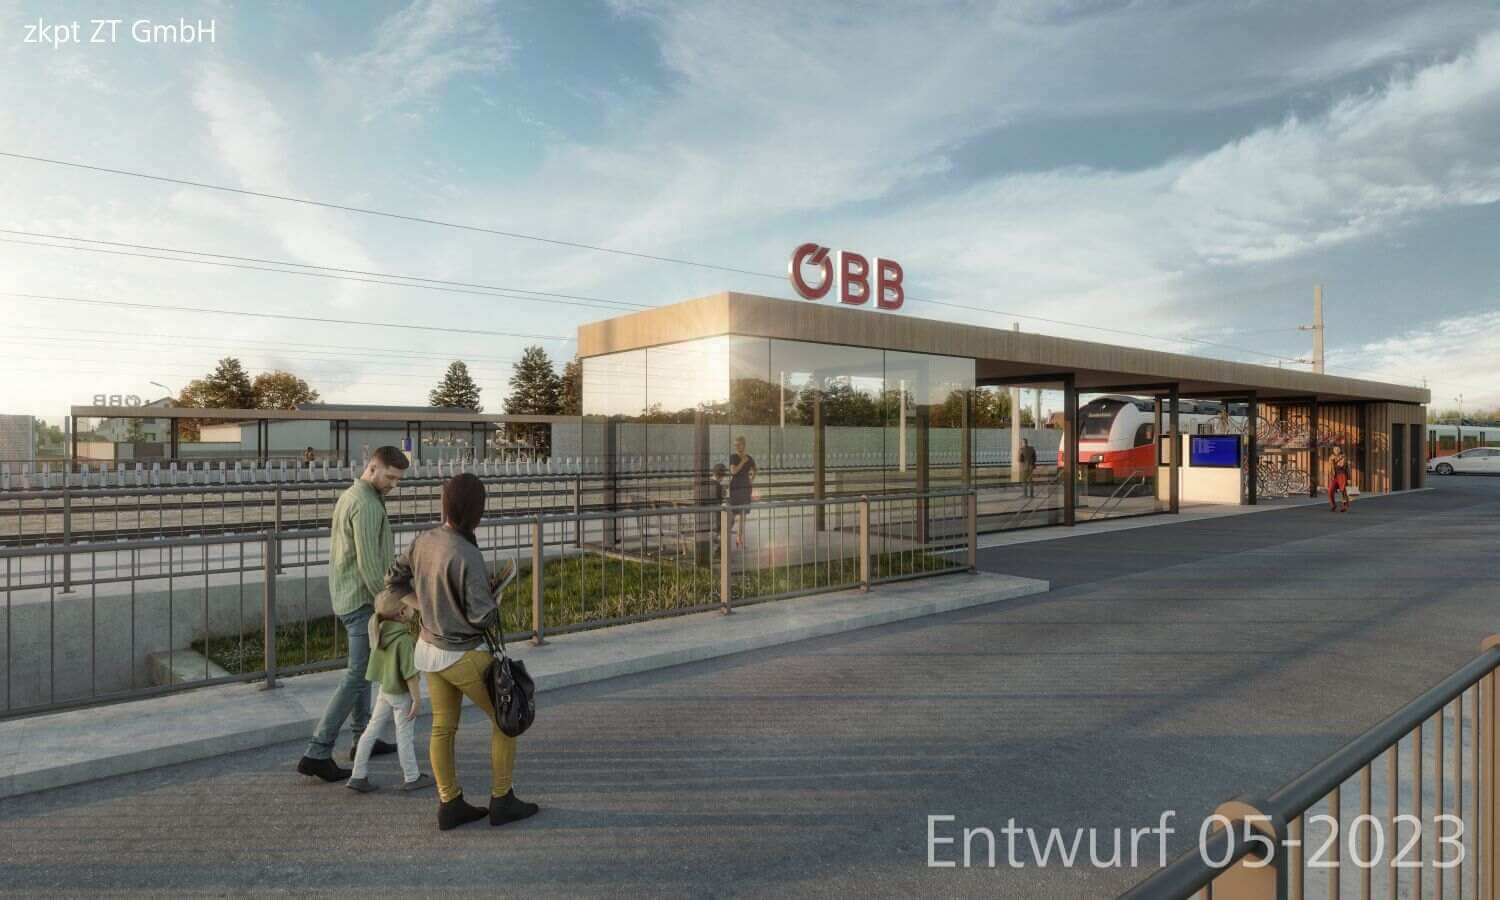 Stanica v Sarasdorfe. Zdroj: ÖBB/ZKPT ZT